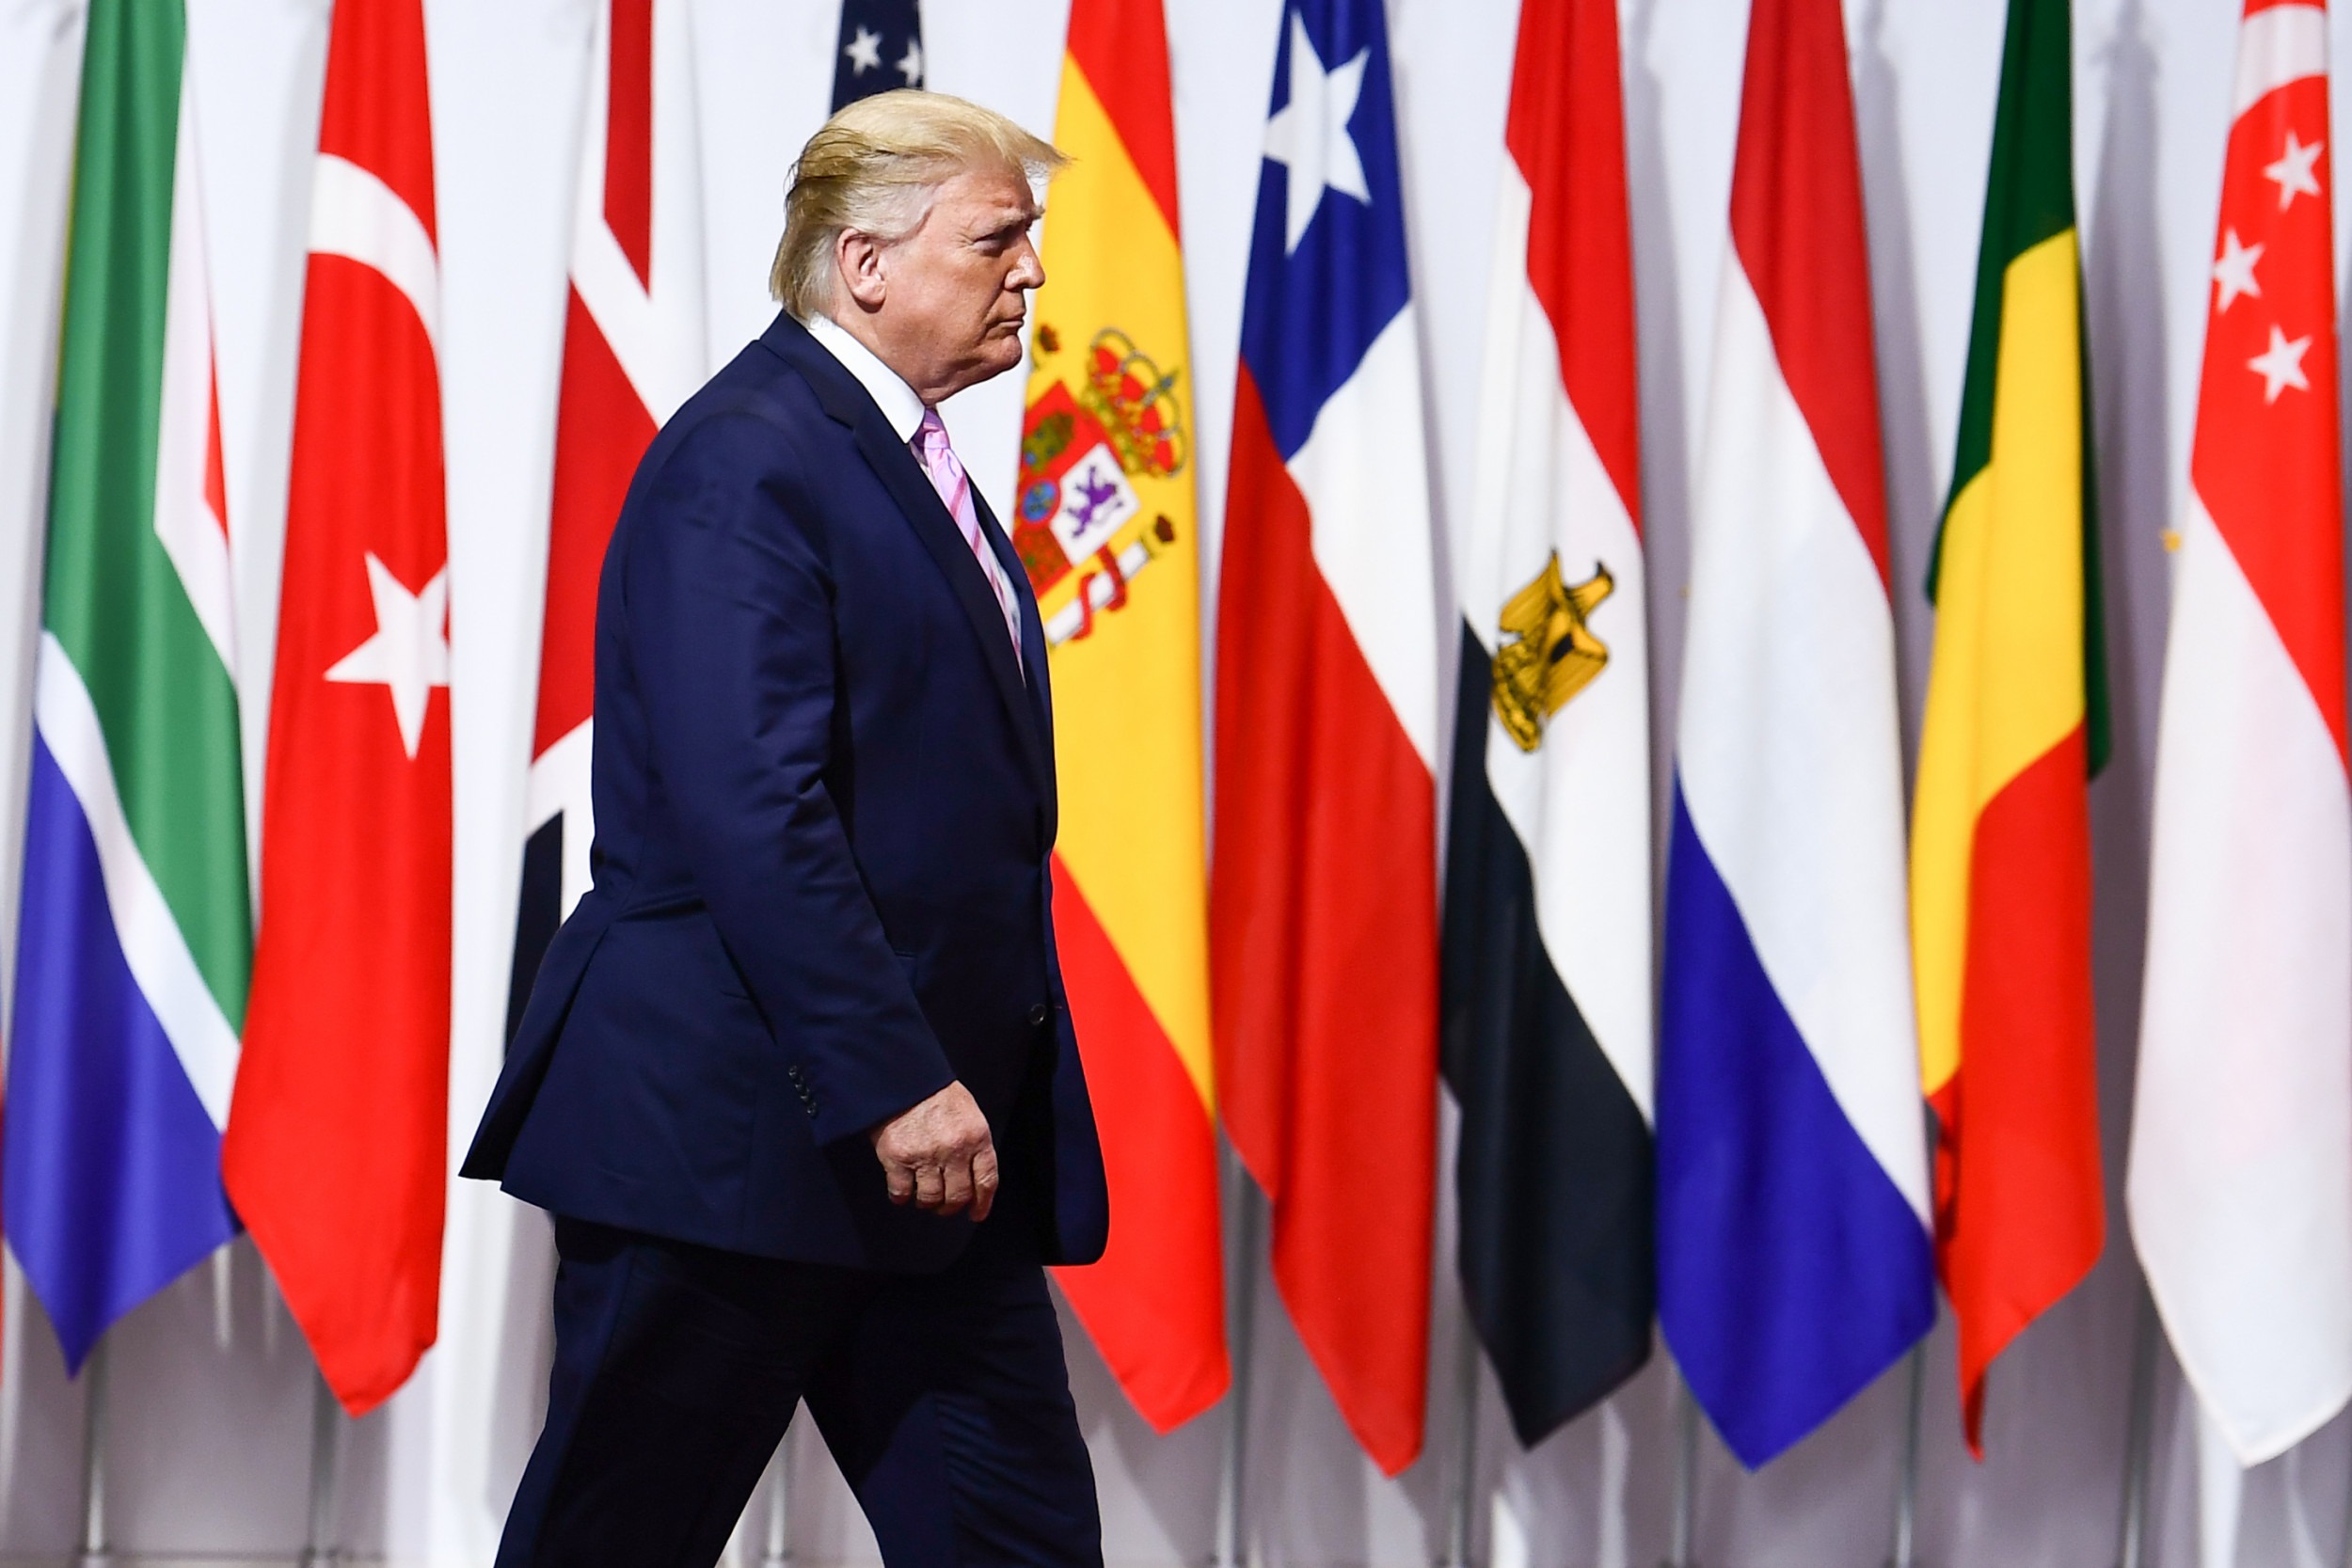 G20 2019: Ο Τραμπ “ταπείνωσε” τον Σάντσεθ – Σάλος στα ισπανικά ΜΜΕ